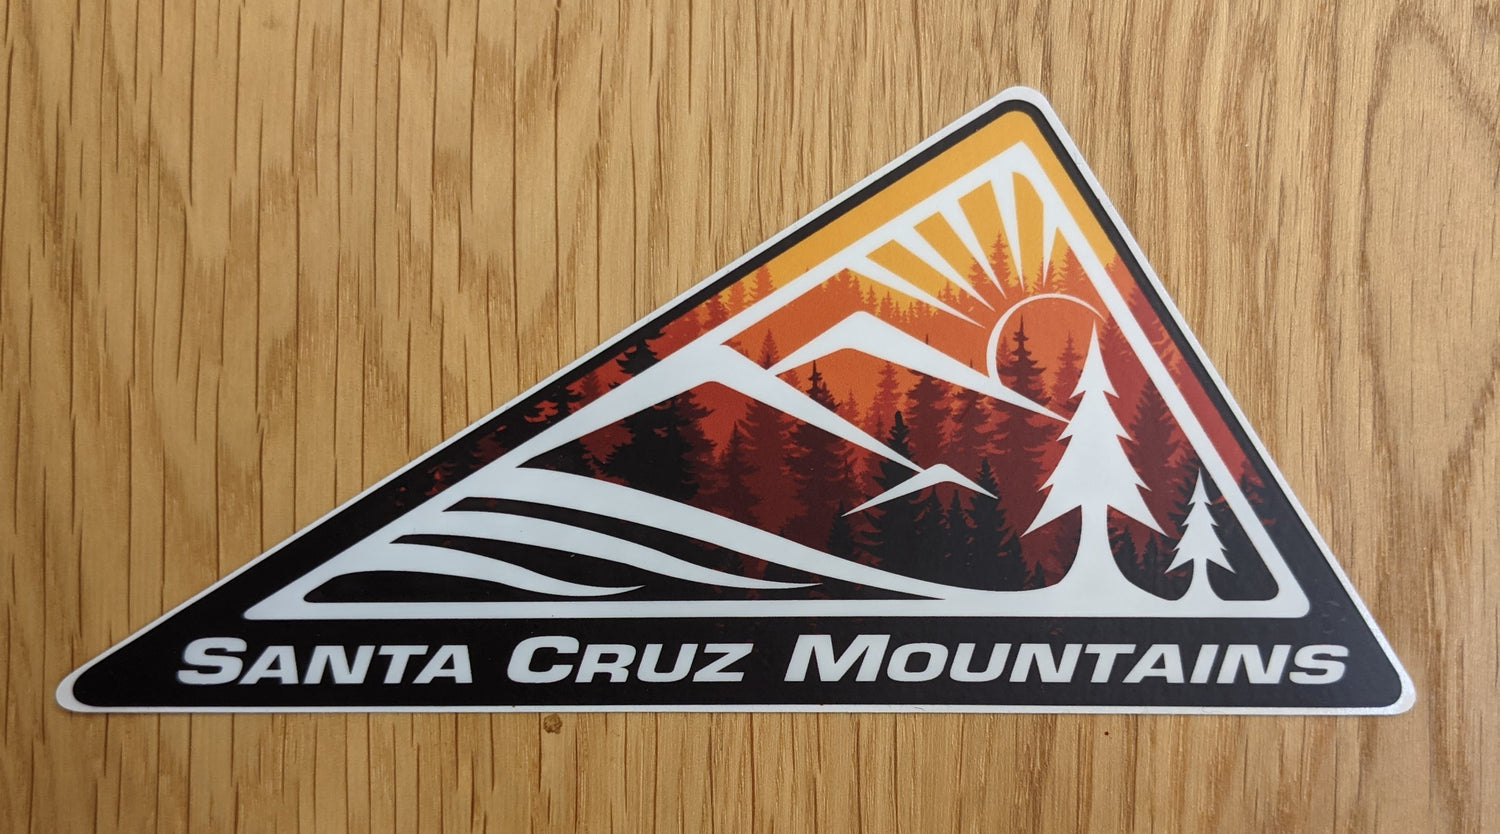 SCM Clothing logo sticker in red reading "Santa Cruz Mountains"